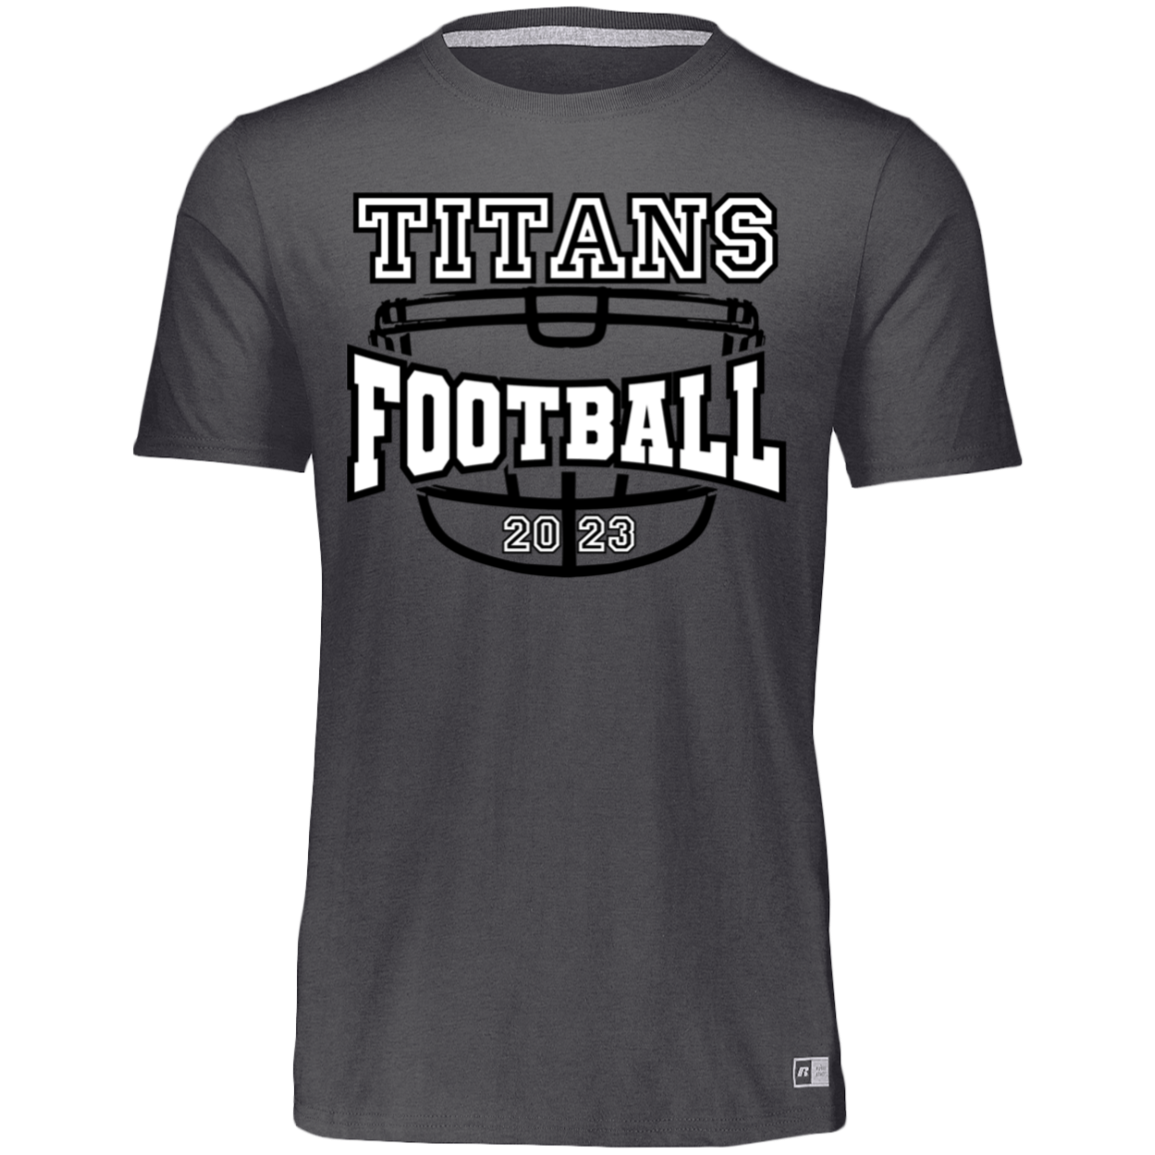 2023 Titans Football Essential Dri-Power Tee